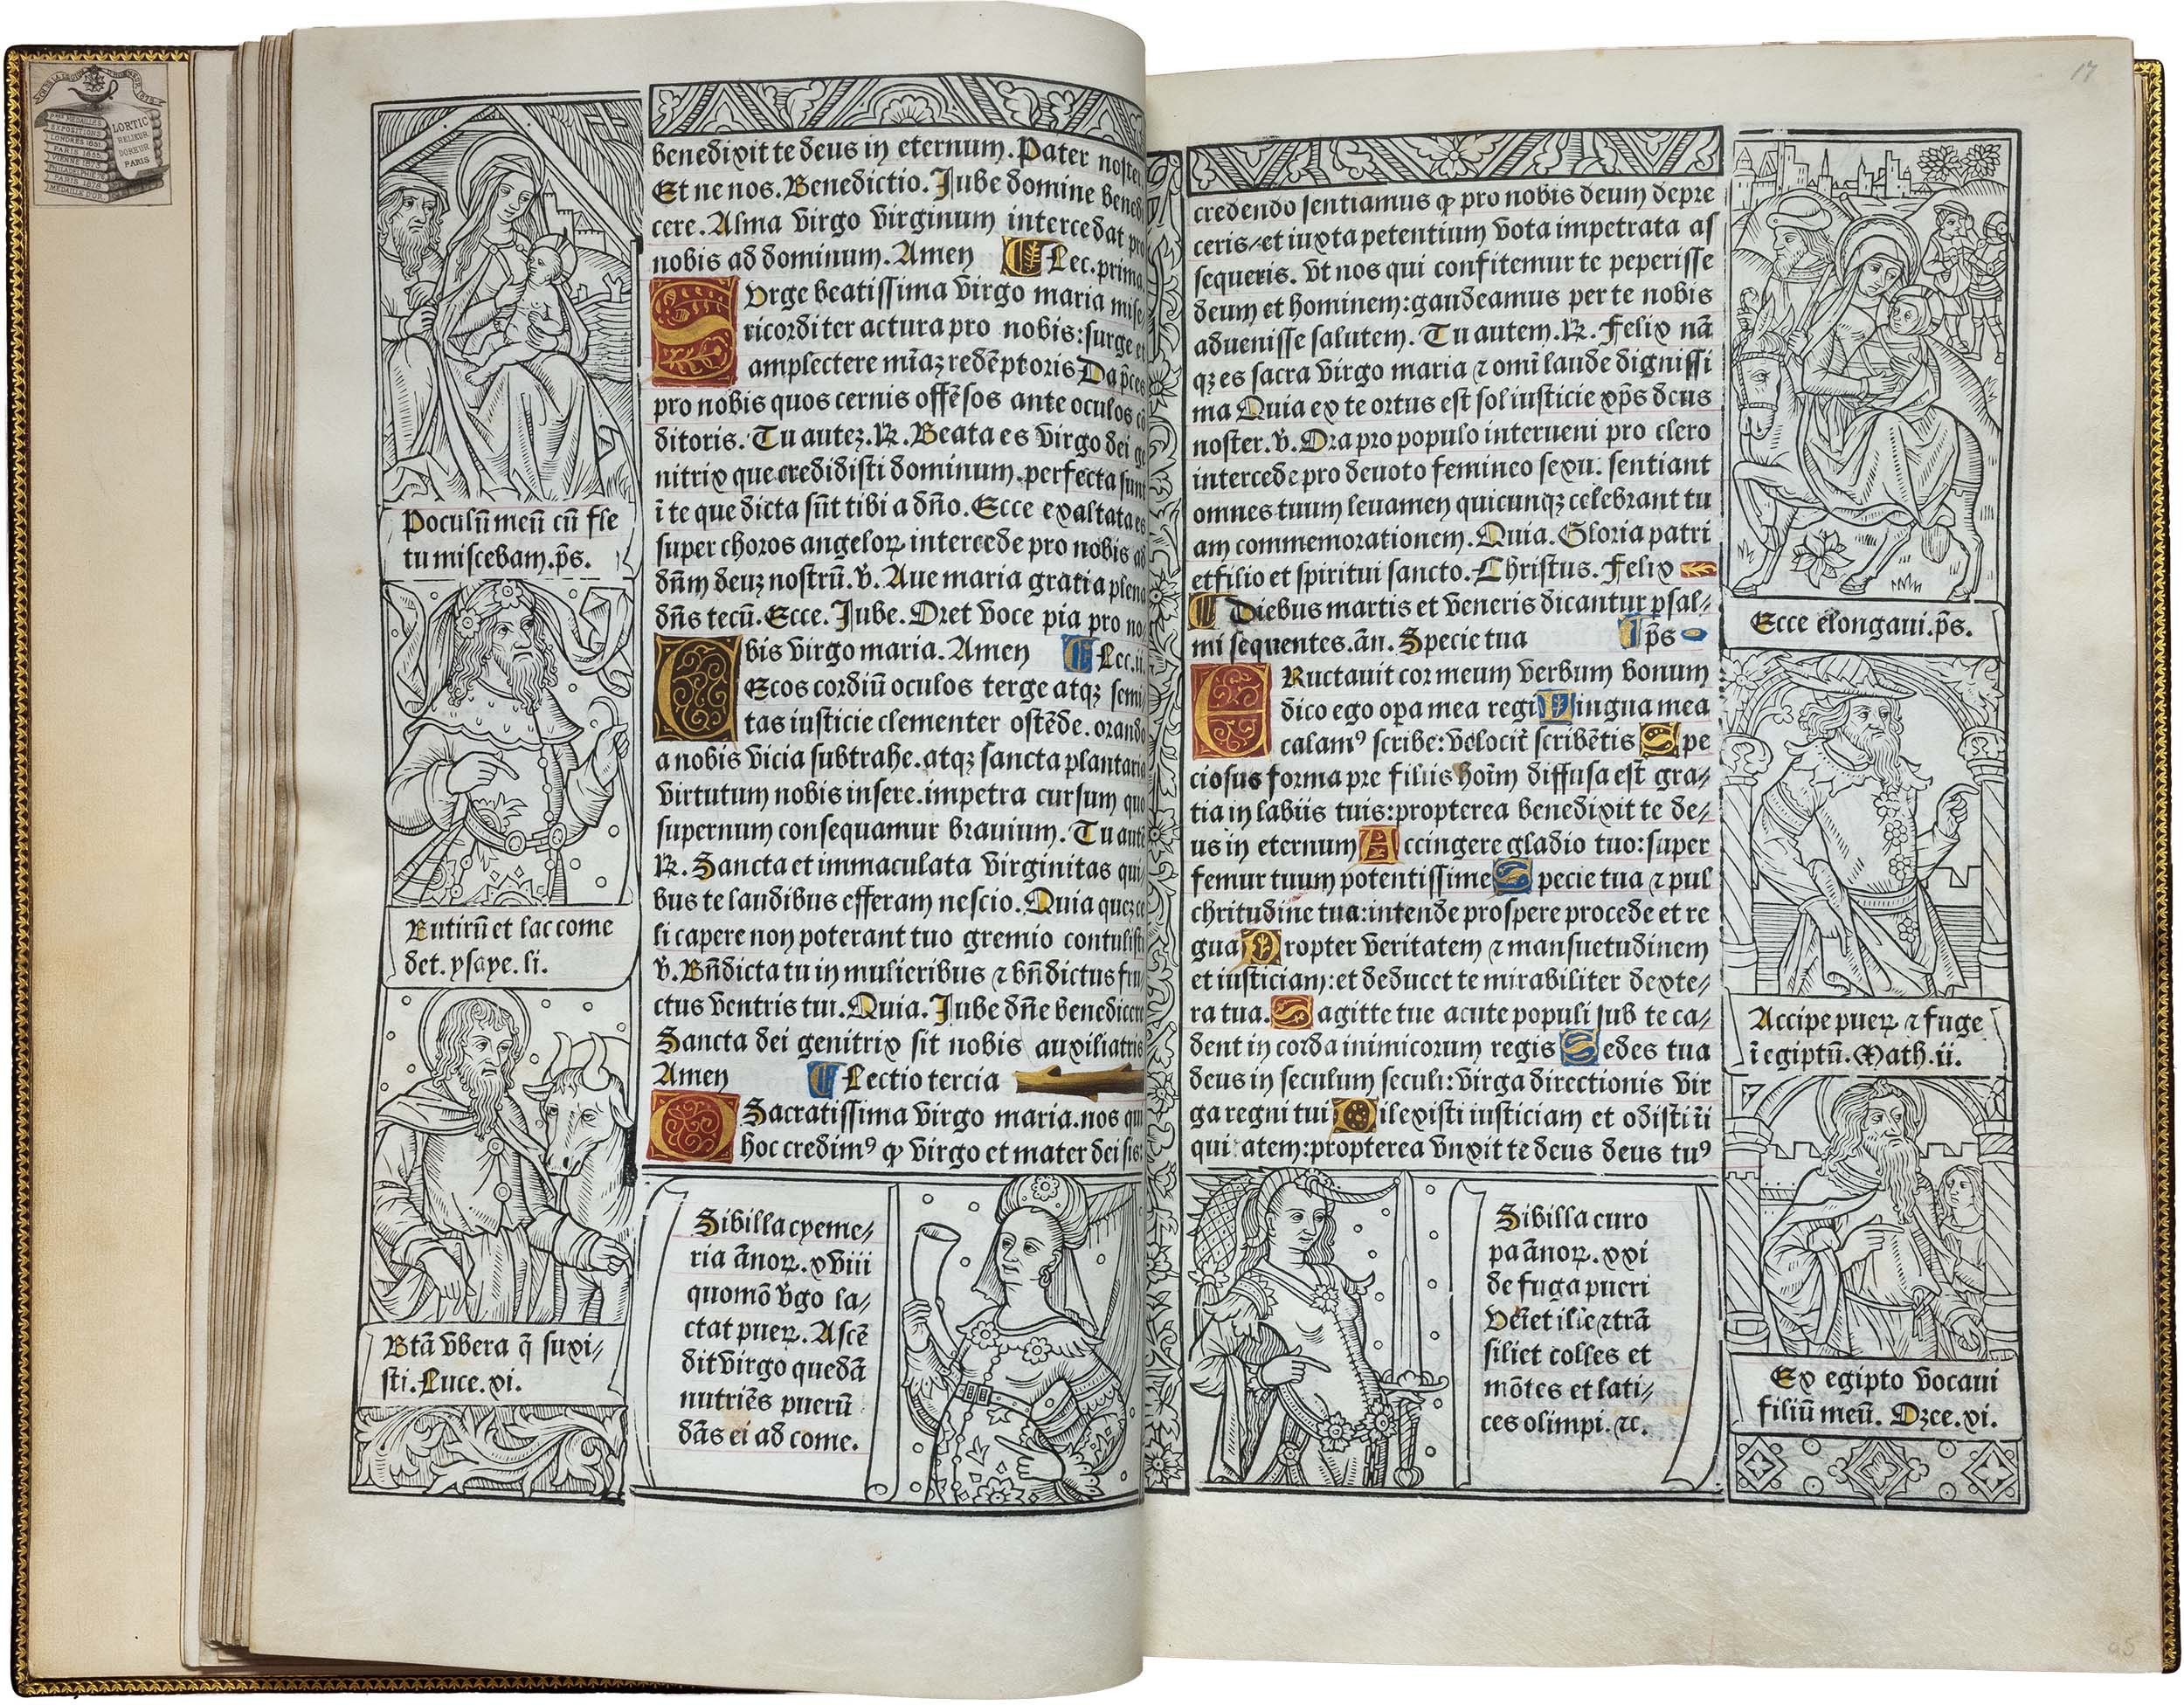 horae-bmv-20.8.1490-printed-book-of-hours-anne-de-beaujeu-de-france-grandes-heures-royales-19.jpg